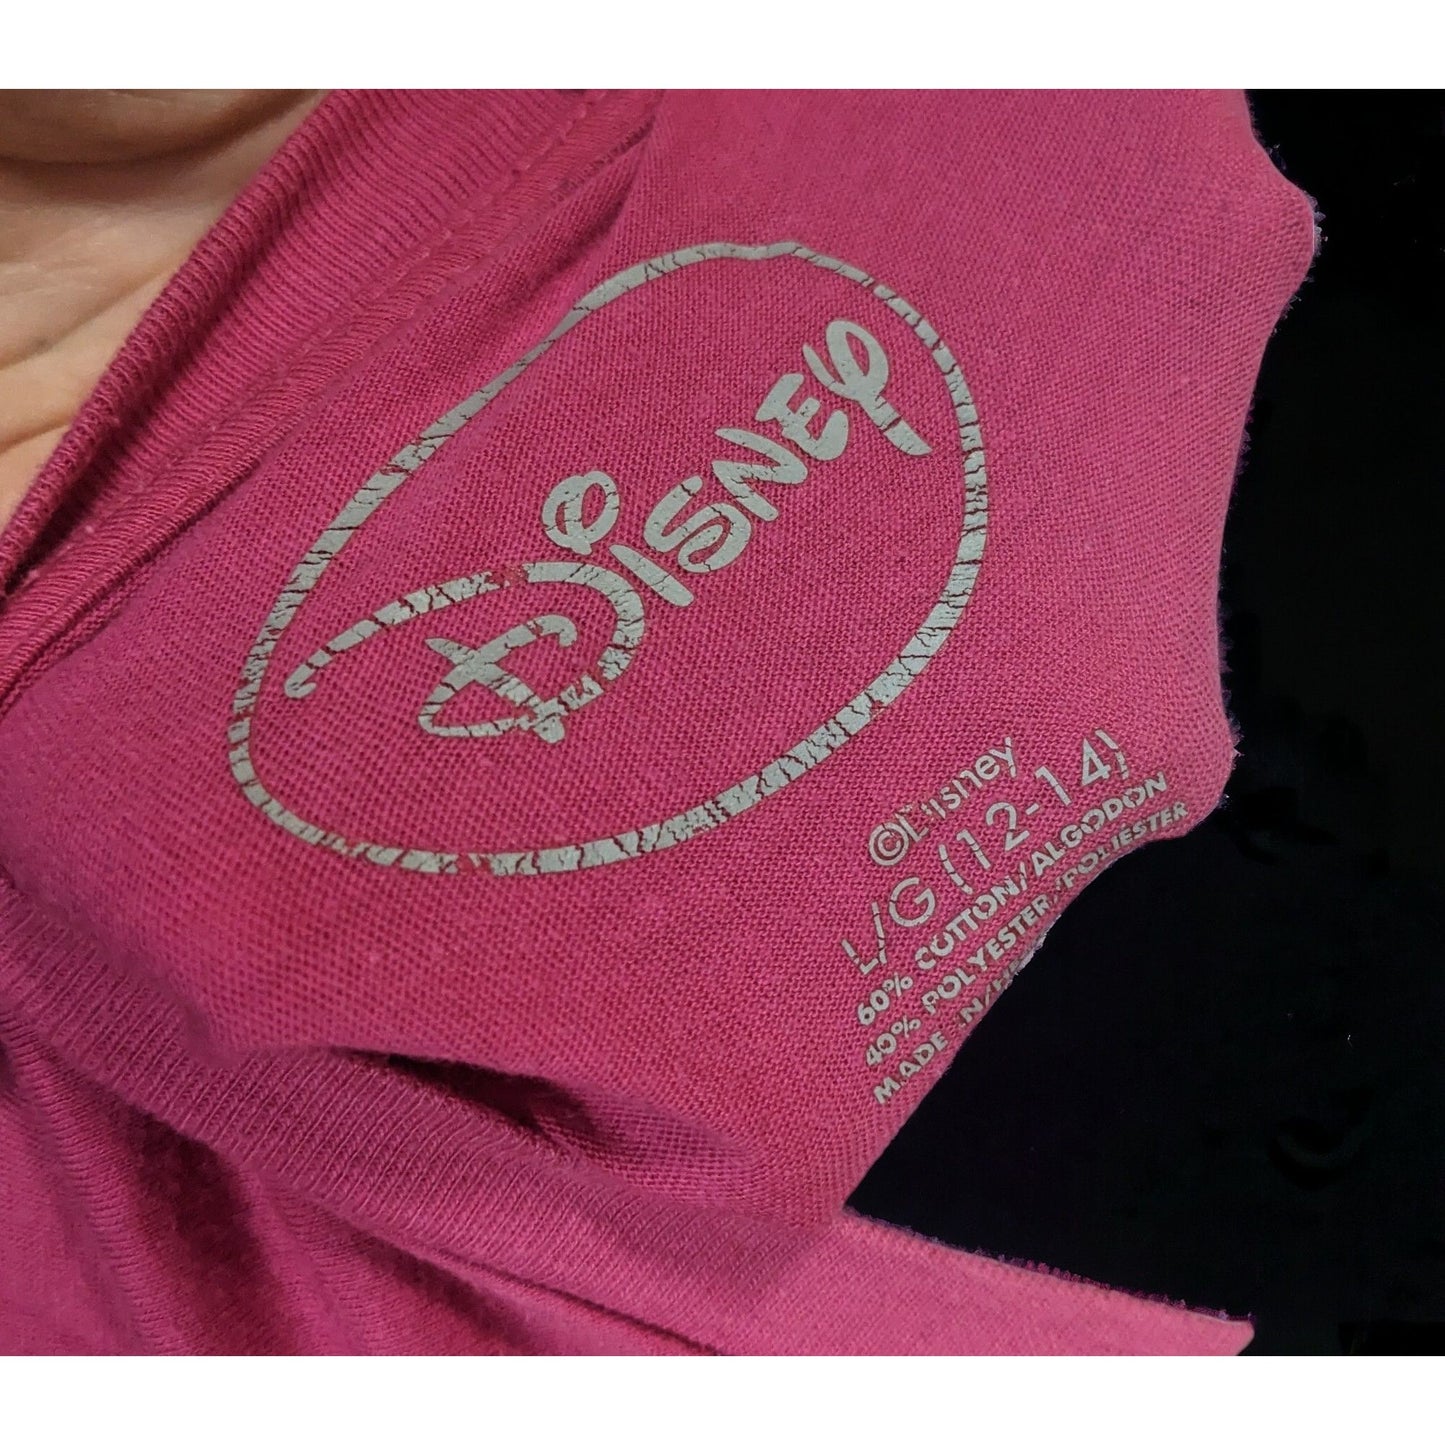 Disney Mickey Mouse Pink Shirt